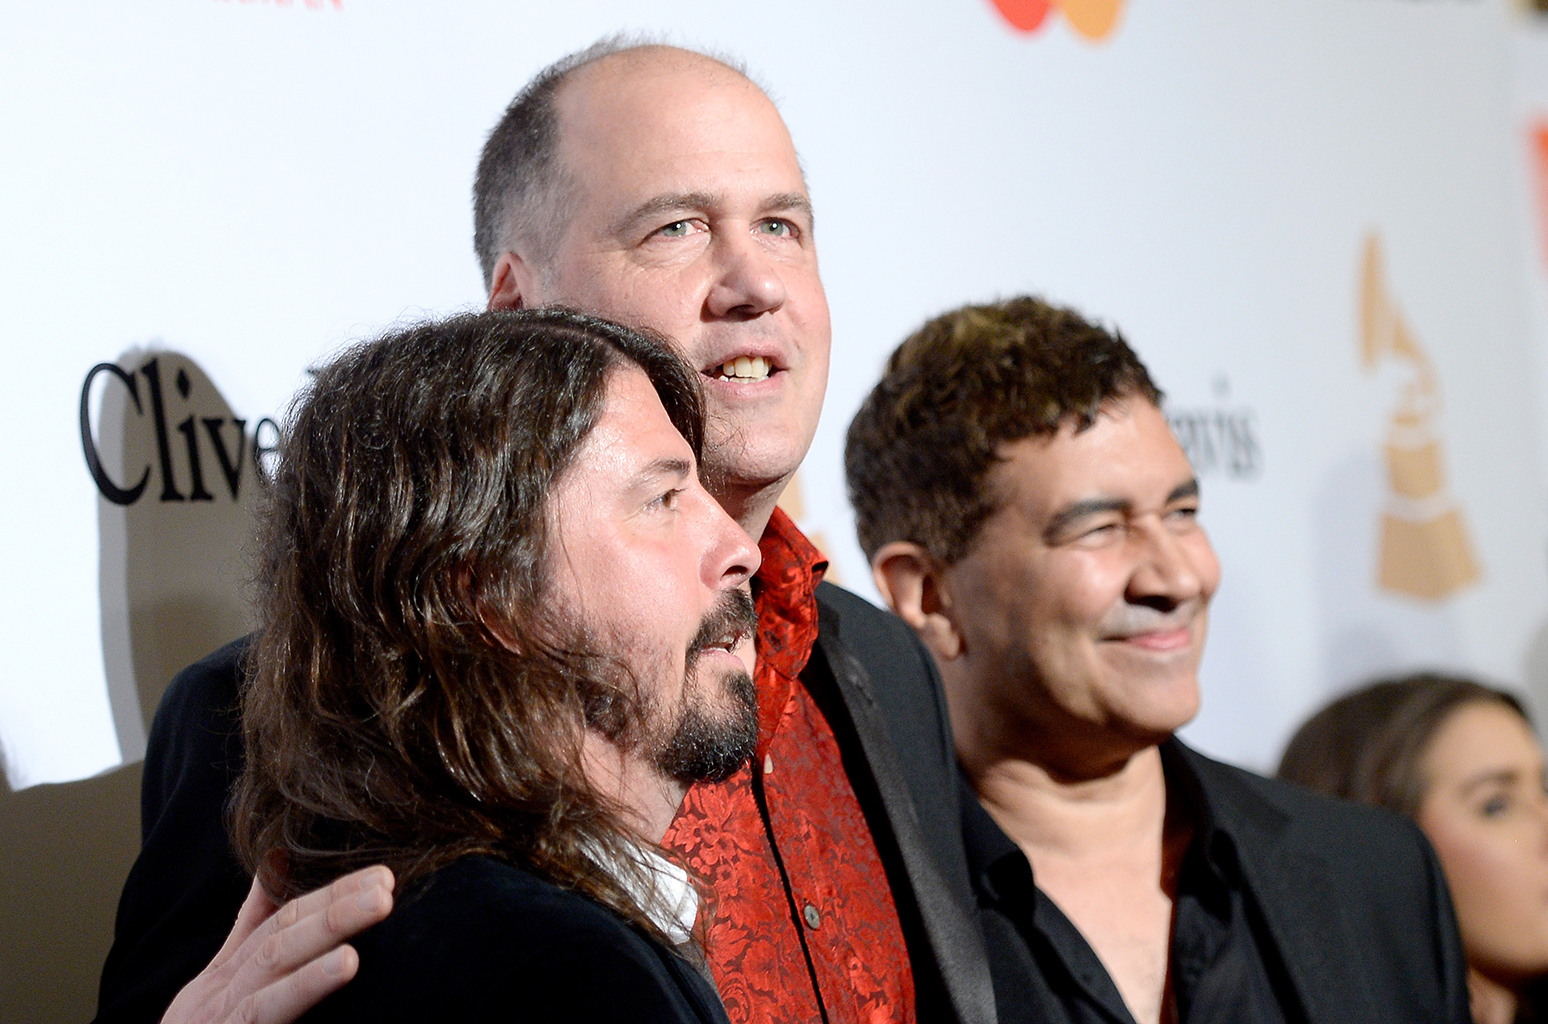 Dave Grohl to Reunite Surviving Nirvana Members for Art of Elysium Benefit - www.billboard.com